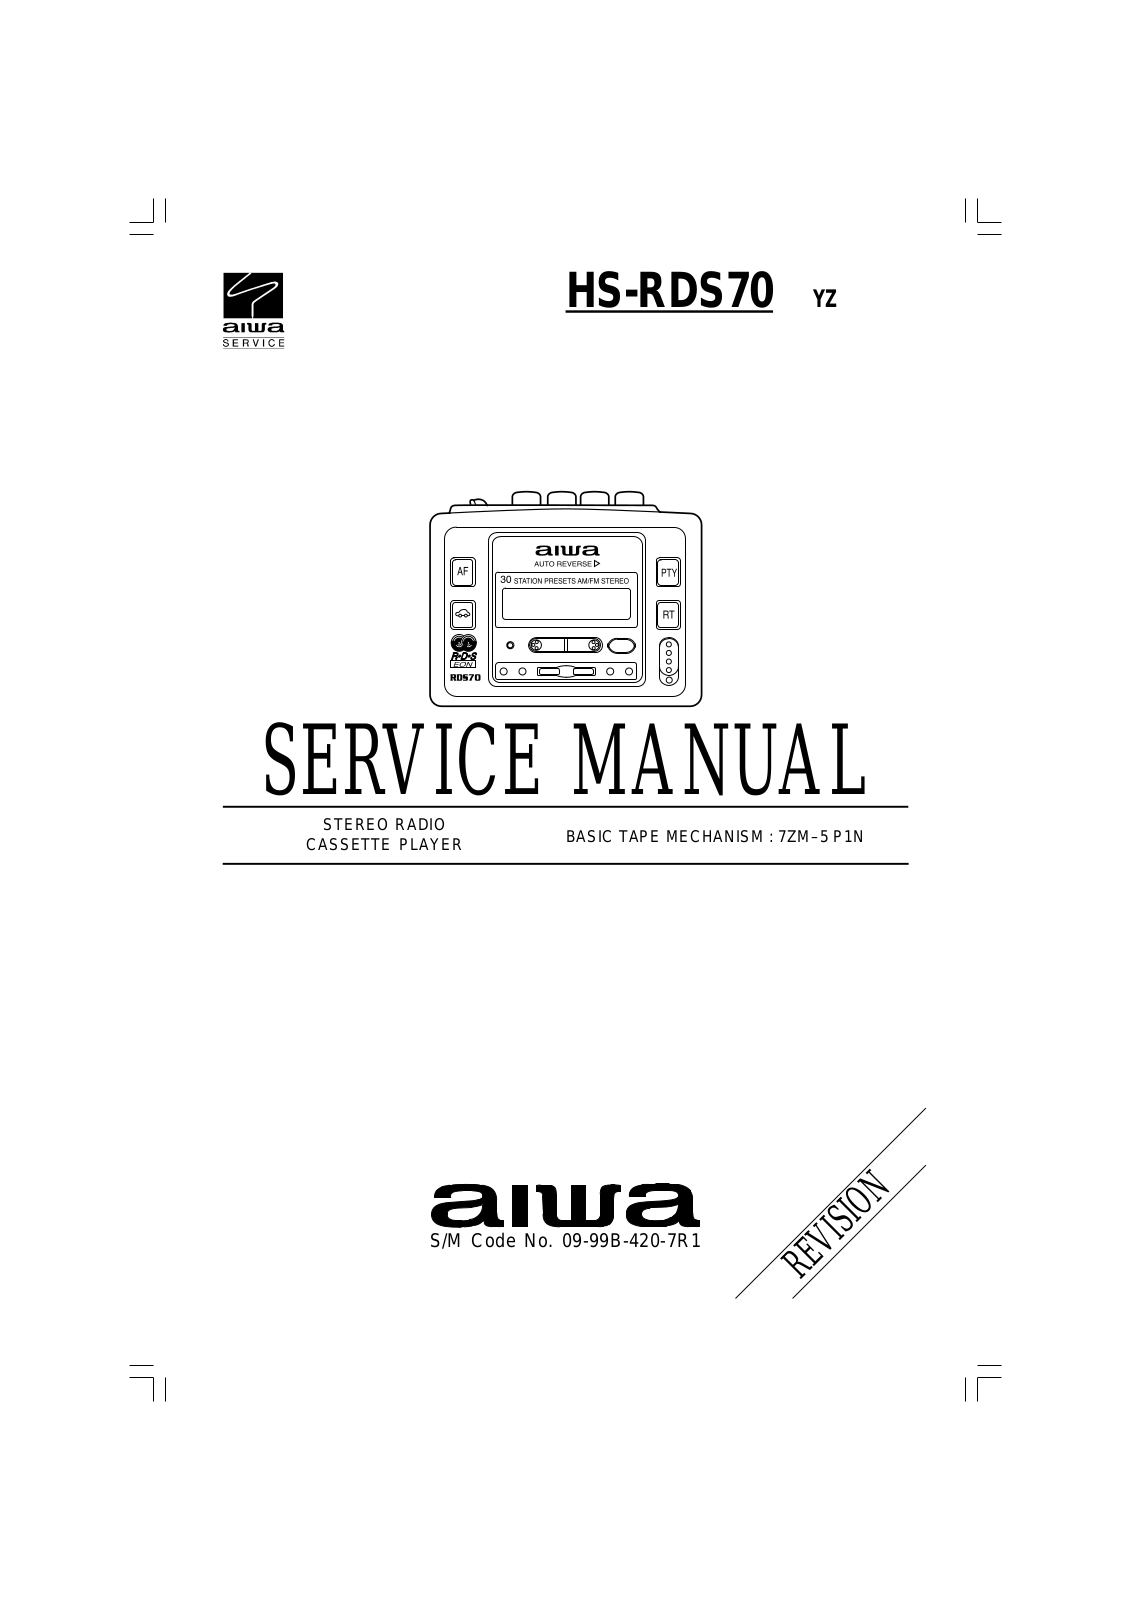 Aiwa HS-RDS70 YZ Service Manual